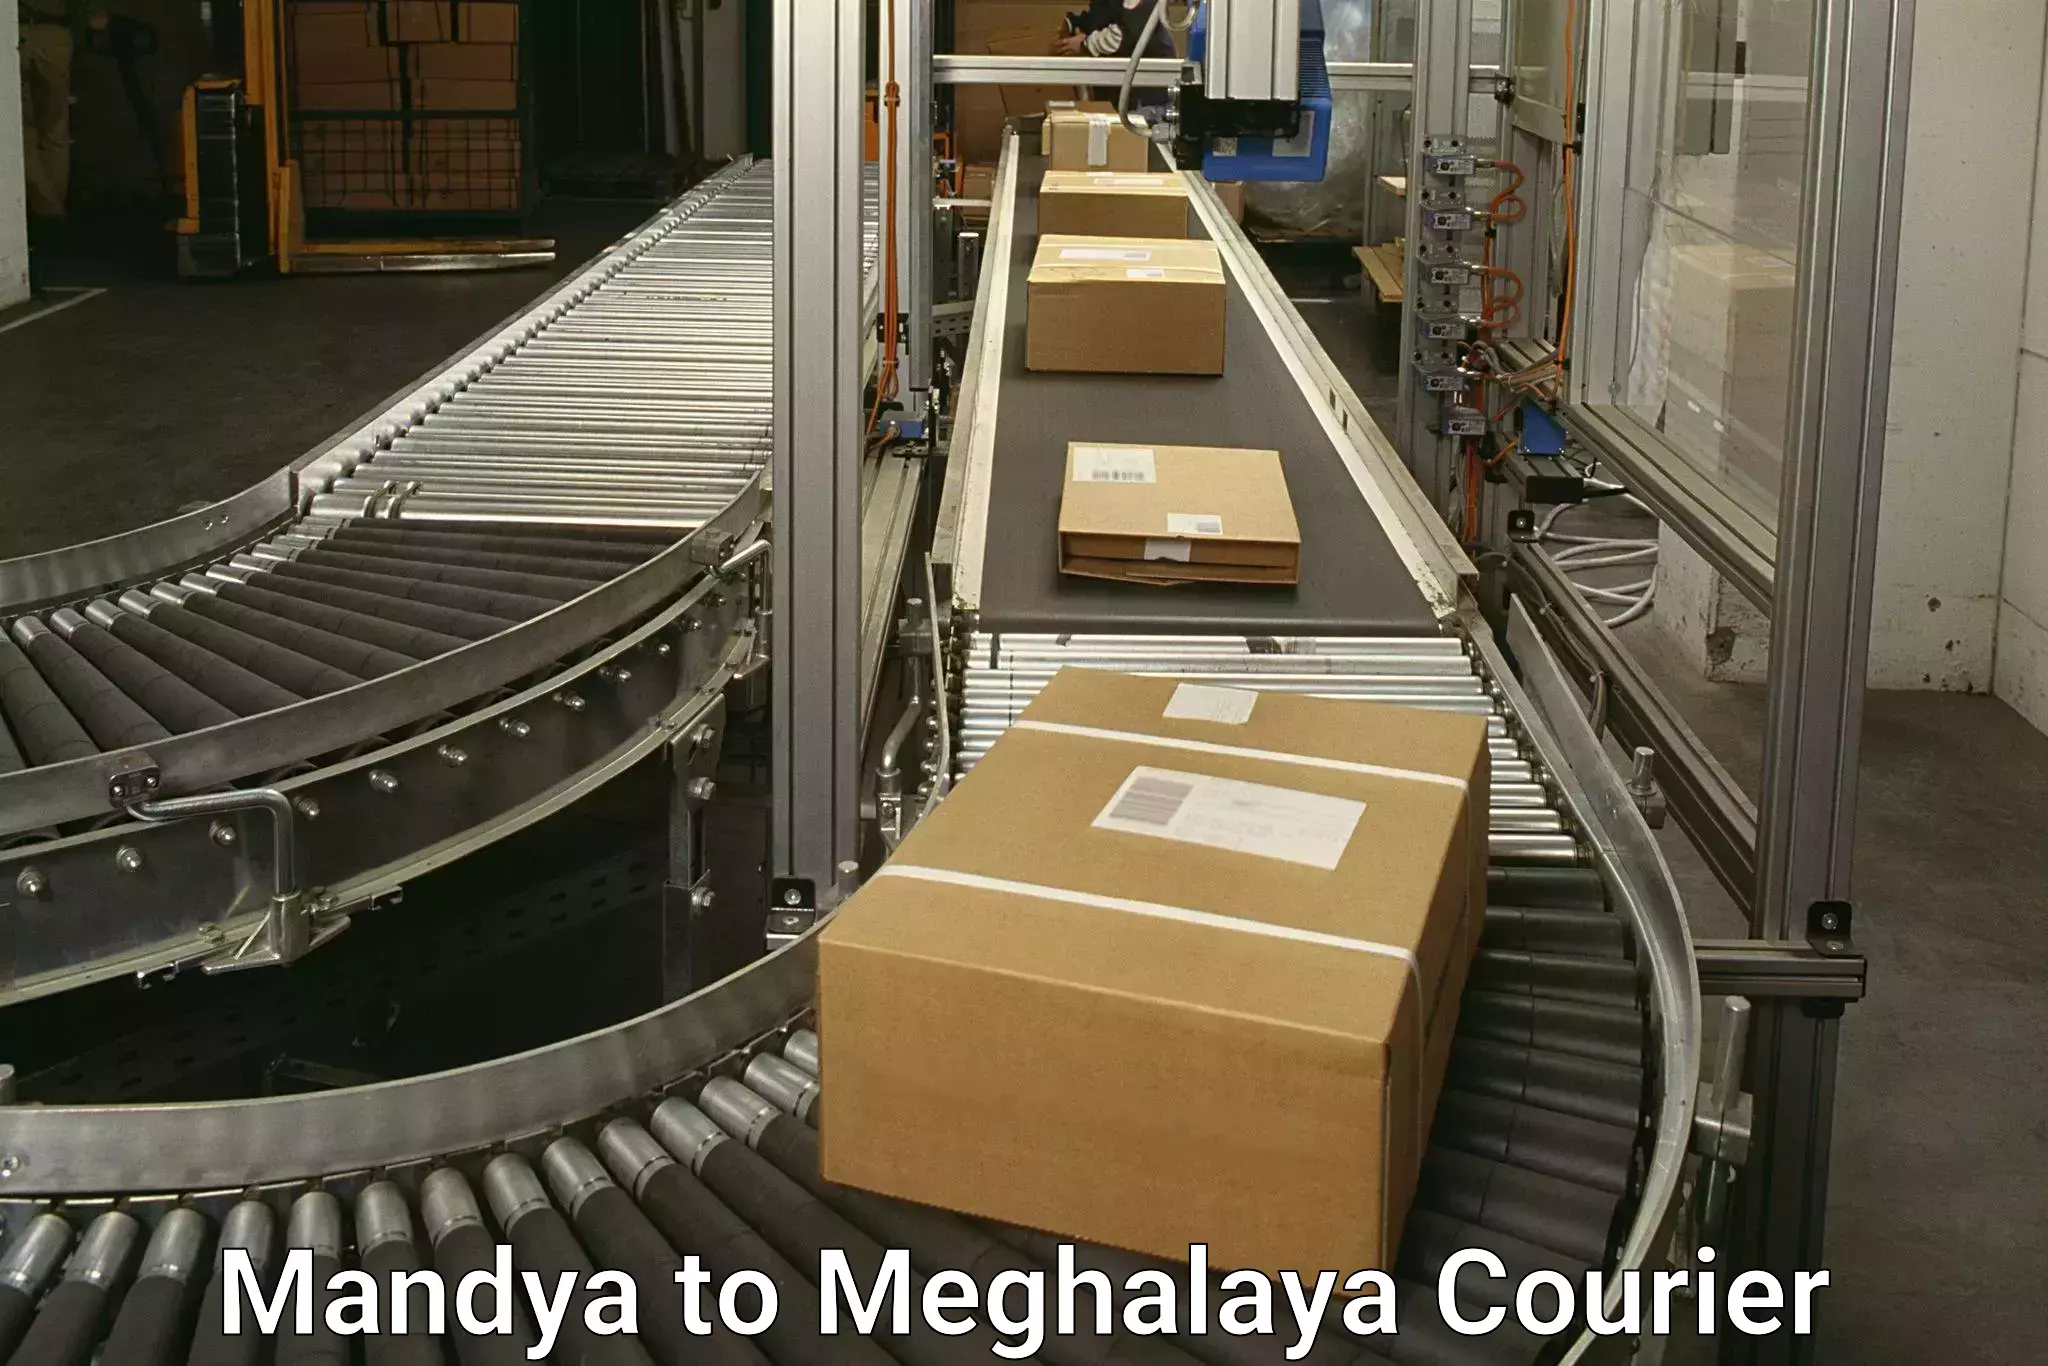 Logistics service provider Mandya to Meghalaya